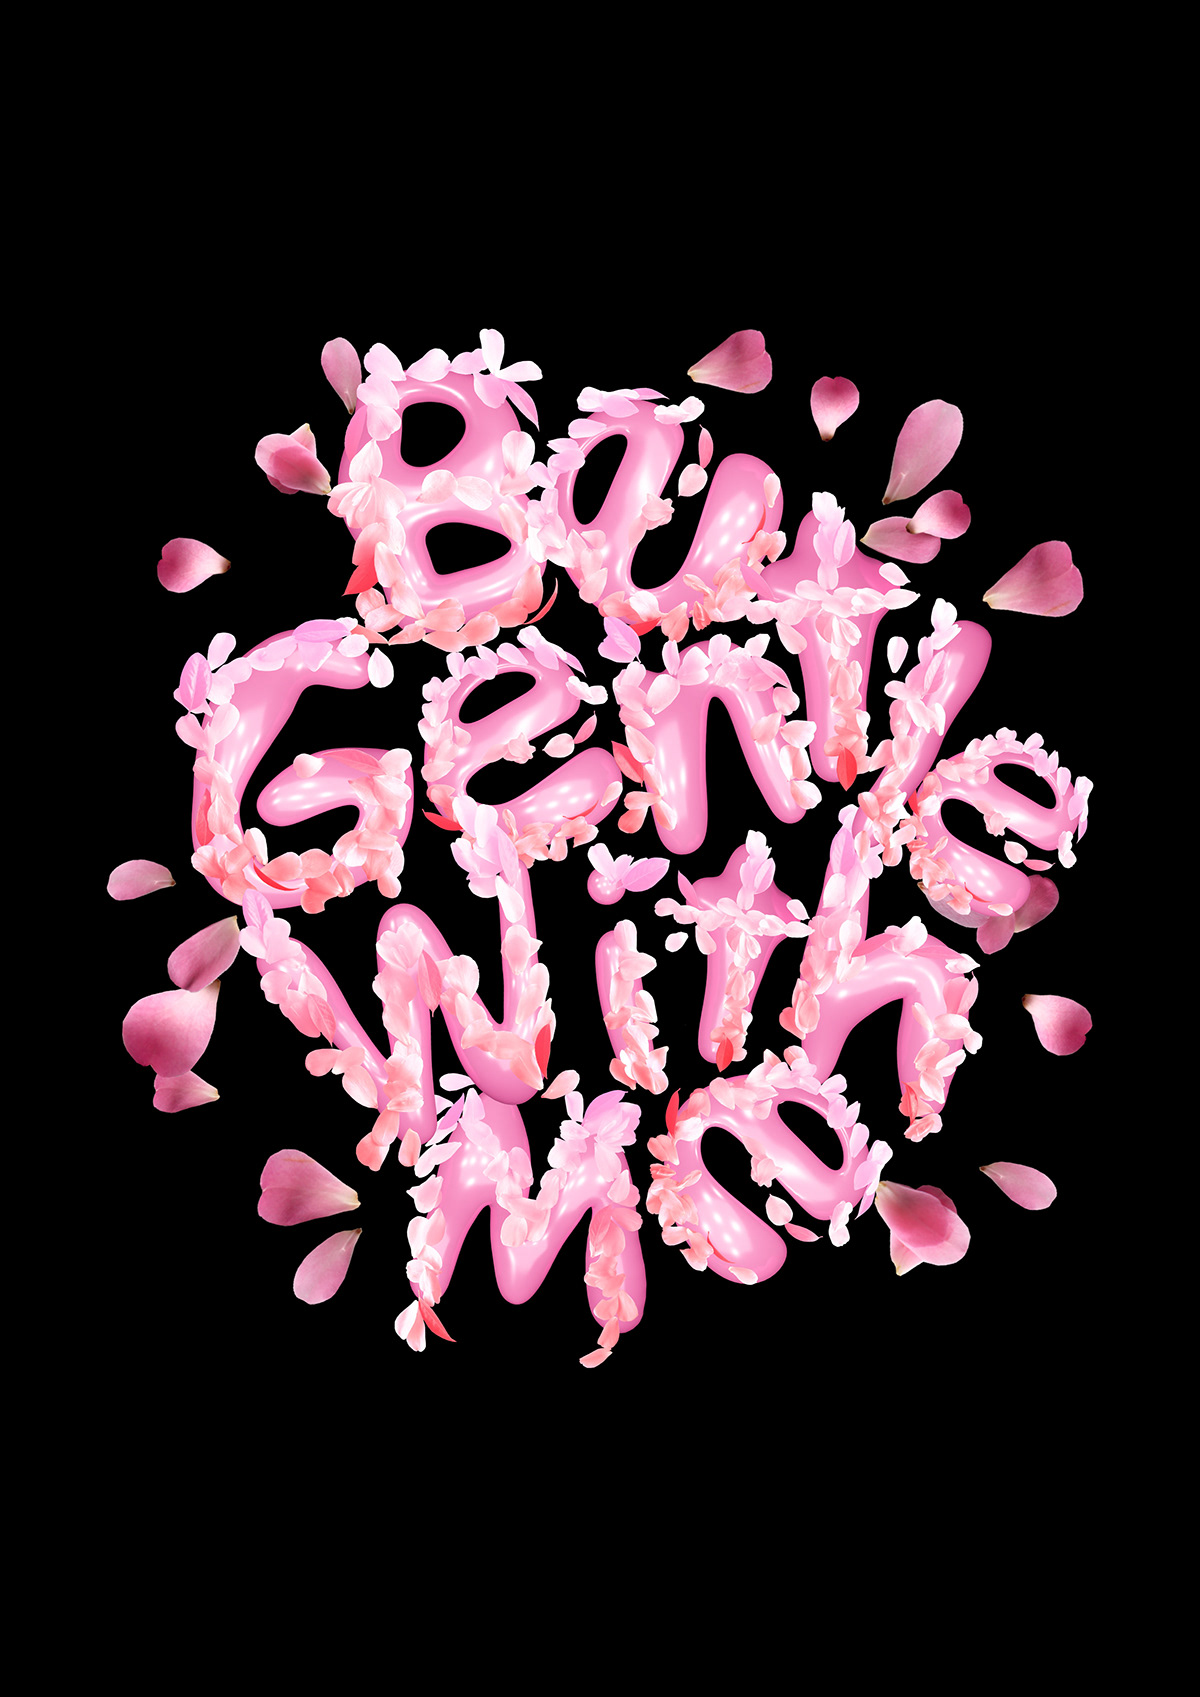 Flora Flowers font handmade font New Zealand petals pink queer type Typeface